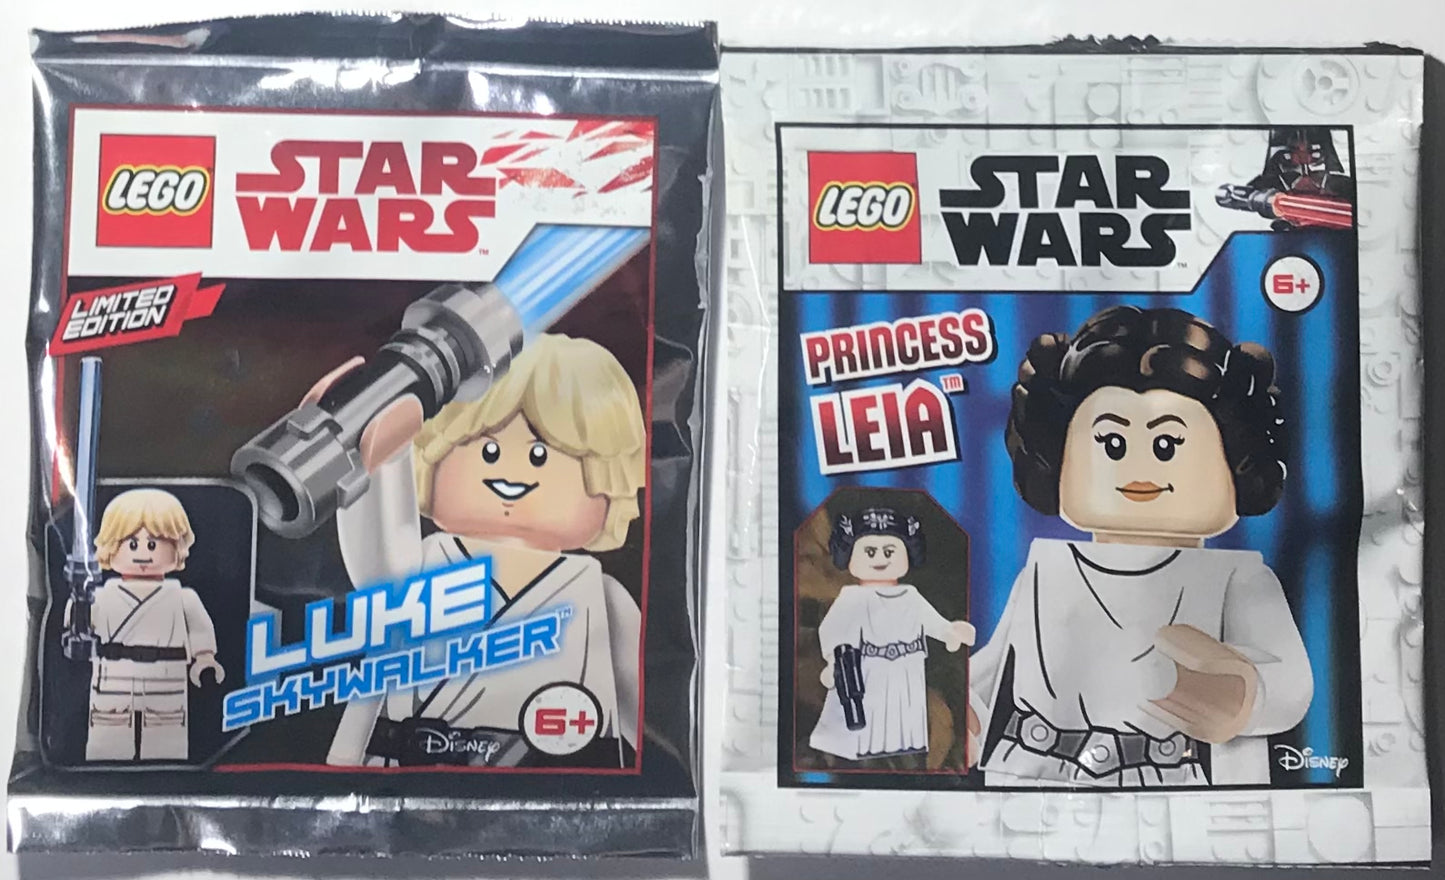 LEGO Star Wars Luke & Leia Minifigure Foil Pack Bag BUNDLE/LOT